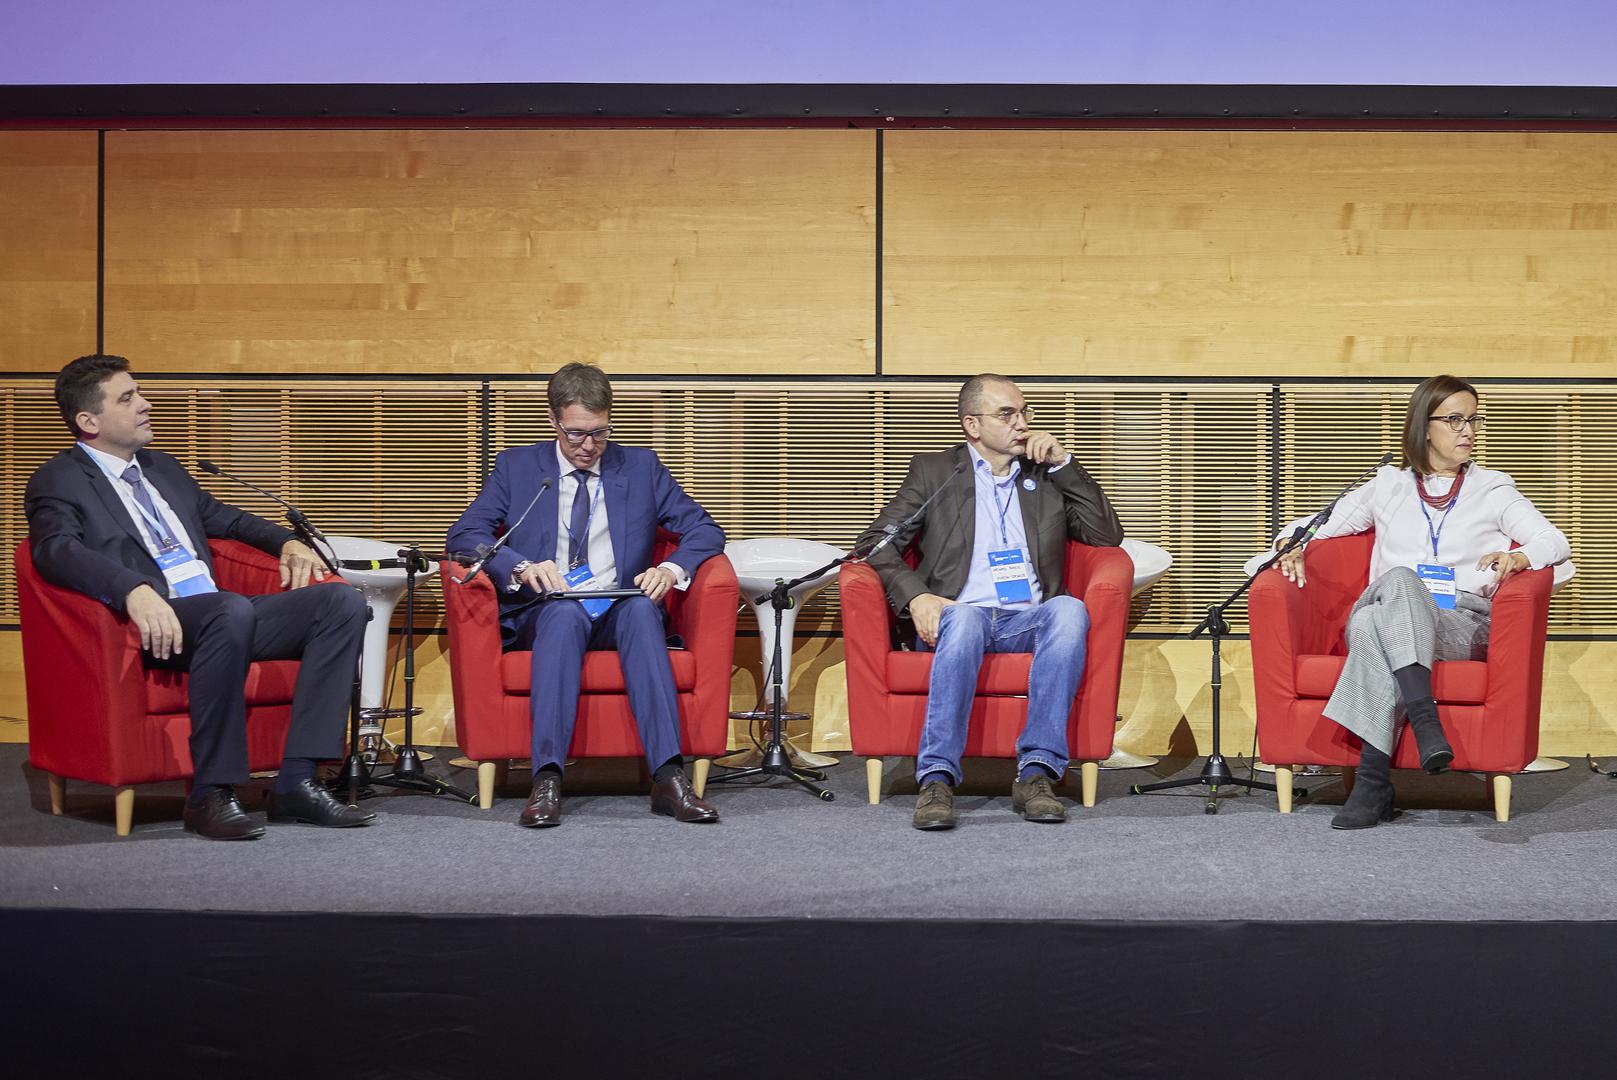 Panel rasprava: Sanel Volarić iz DSM-a, Daniel Lenardić iz KPMG-a, investitor Nenad Bakić i Ivana Novosel iz A1